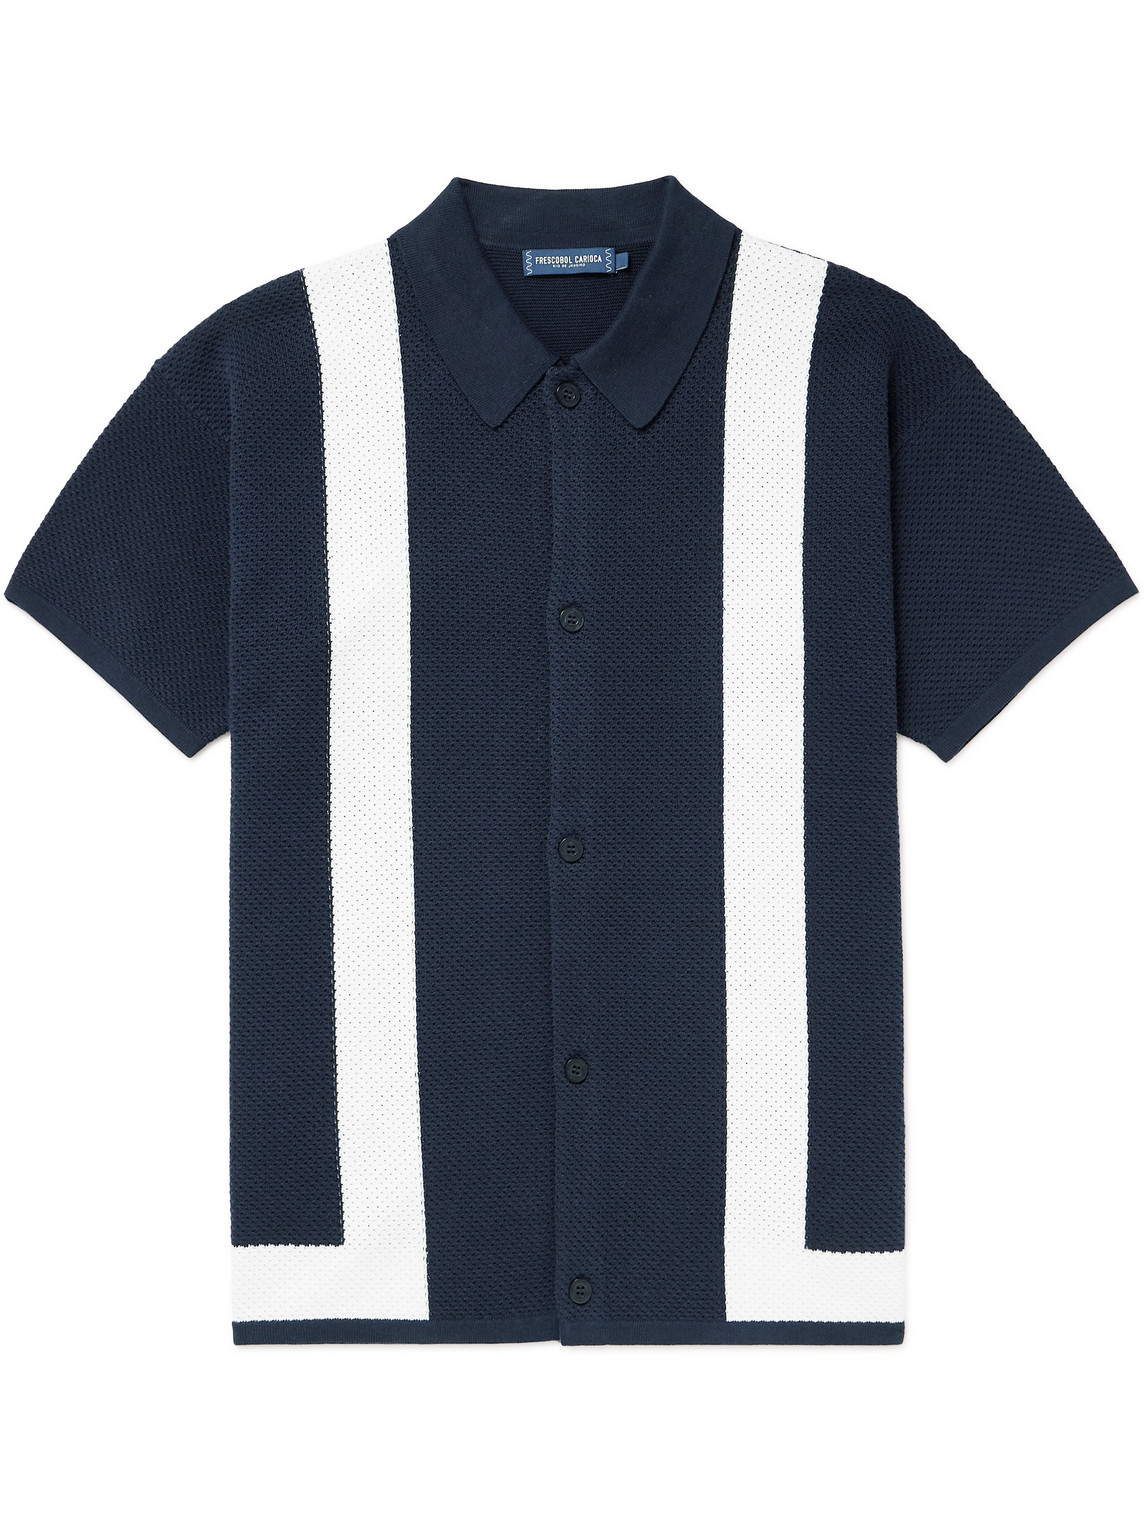 Frescobol Carioca - Barretos Striped Knitted Cotton Shirt - Men - Blue - L von Frescobol Carioca